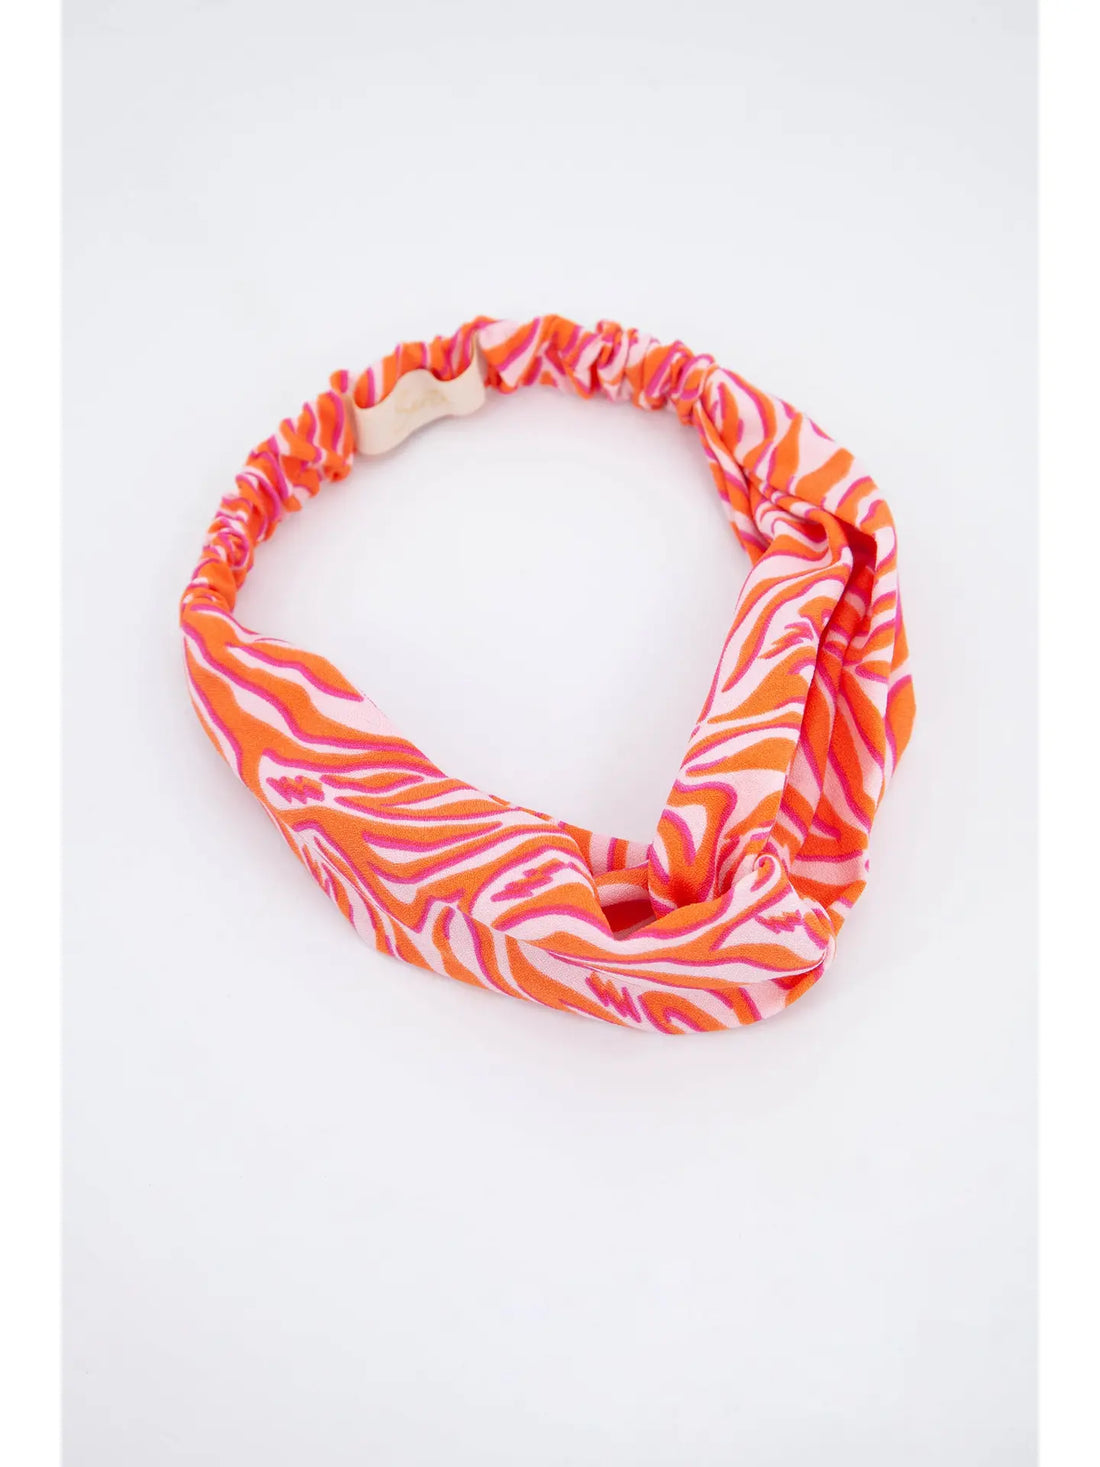 Sassie Textured Painted Chevron Print Headband in coral